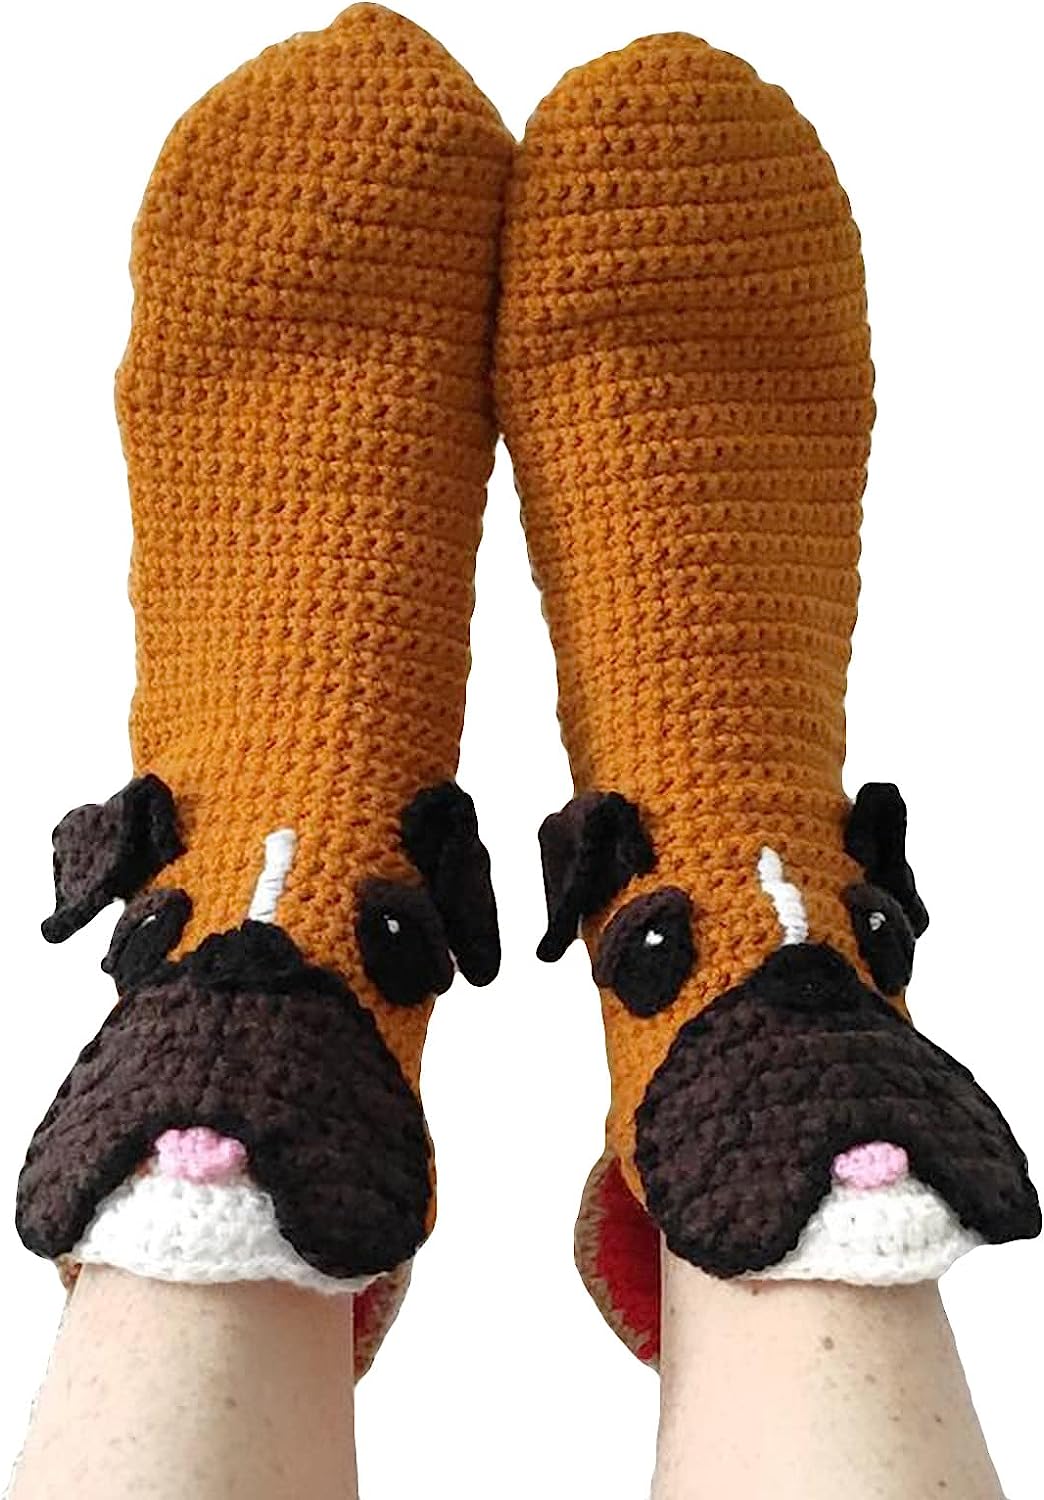 THATLILSHOP One Size / Dog Brown Women Men Novelty Animal Pattern Socks Crazy Funny Knit Crocodile Socks Funny Gifts